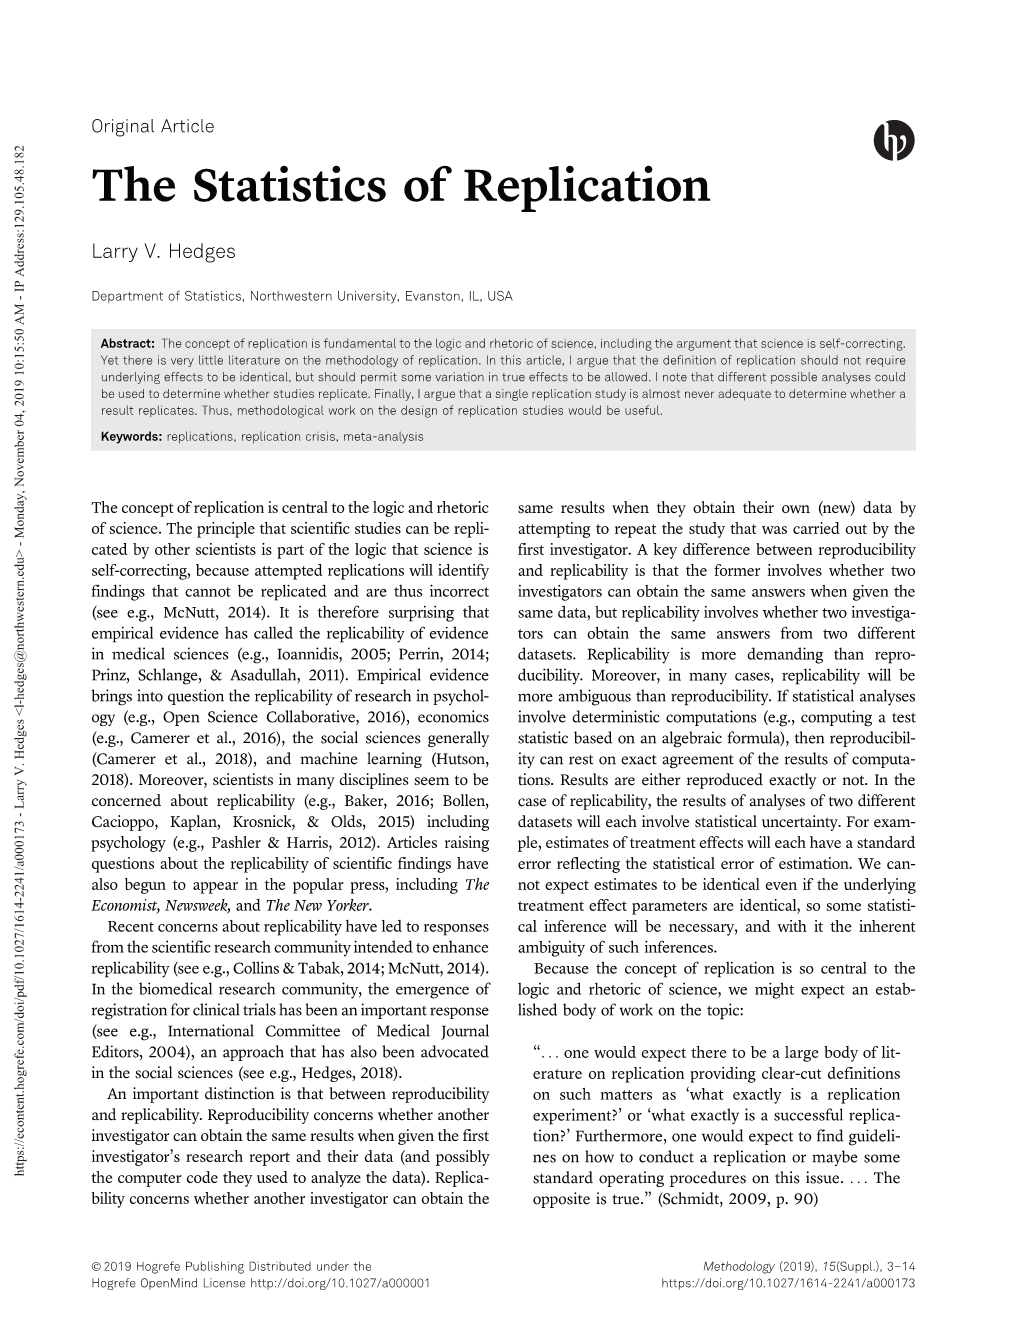 The Statistics of Replication